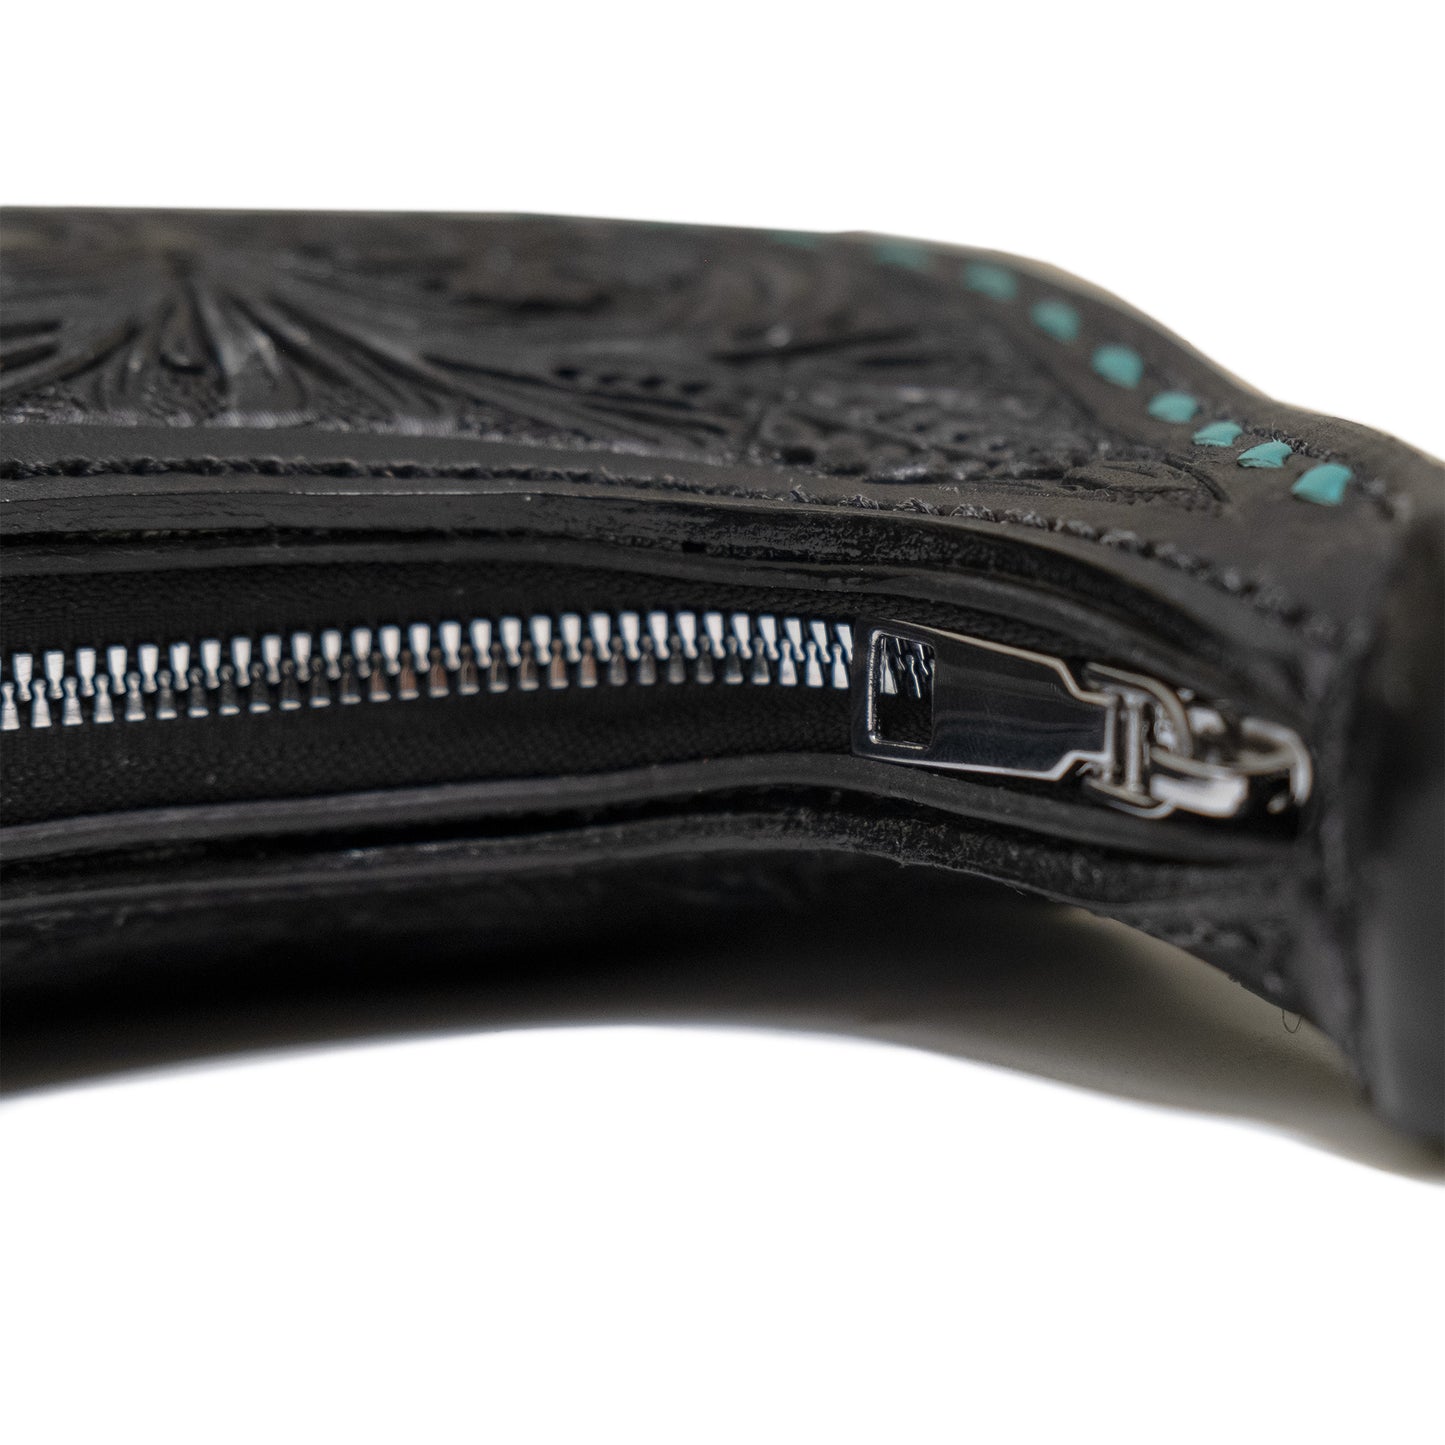 The Alamo Mini Handbag black leather with teal buckstitch